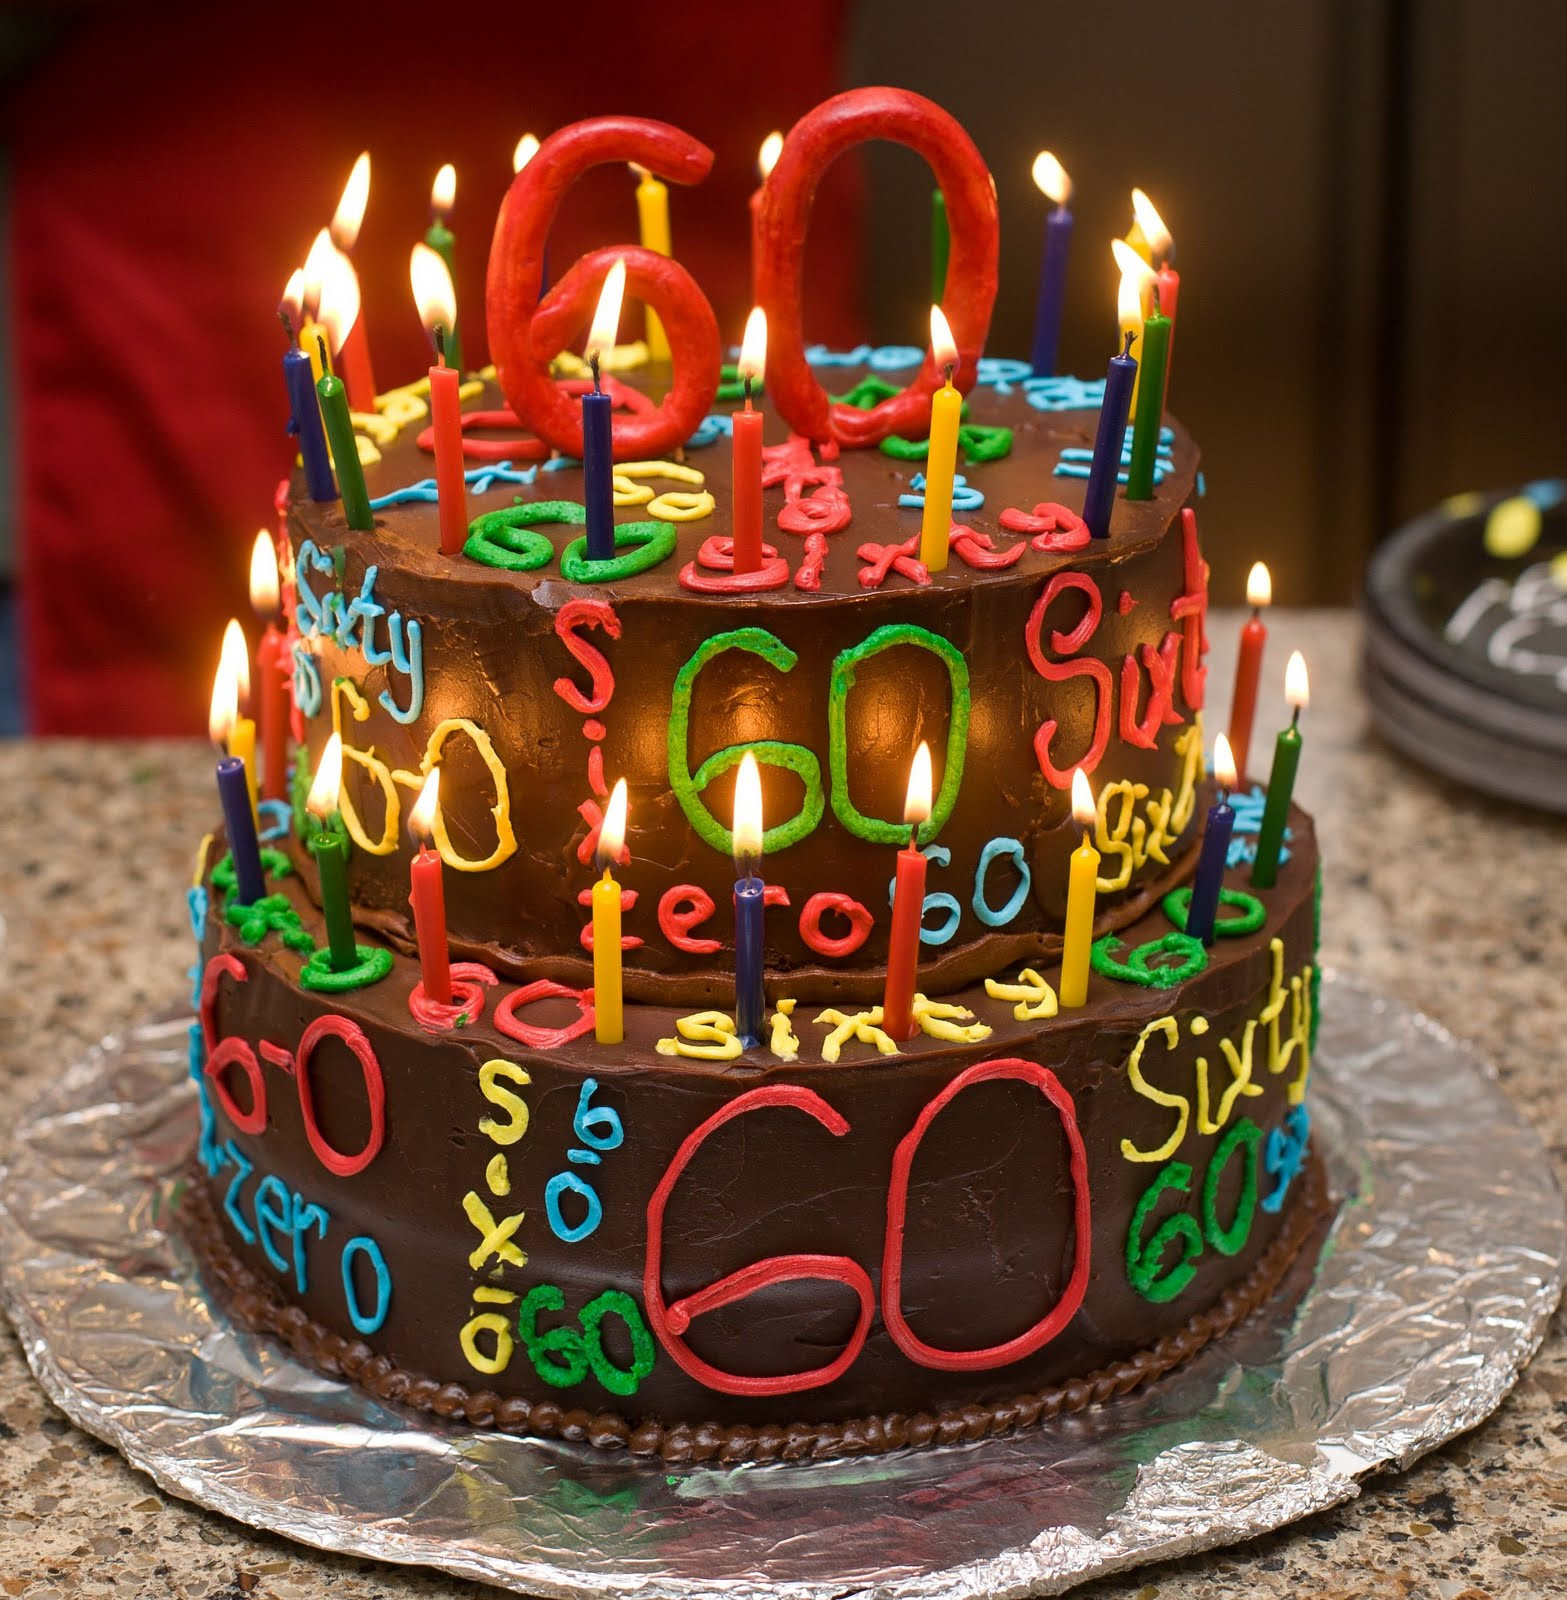 Funny 60th Birthday Cakes
 The Happy Caker Happy 60th Birthday